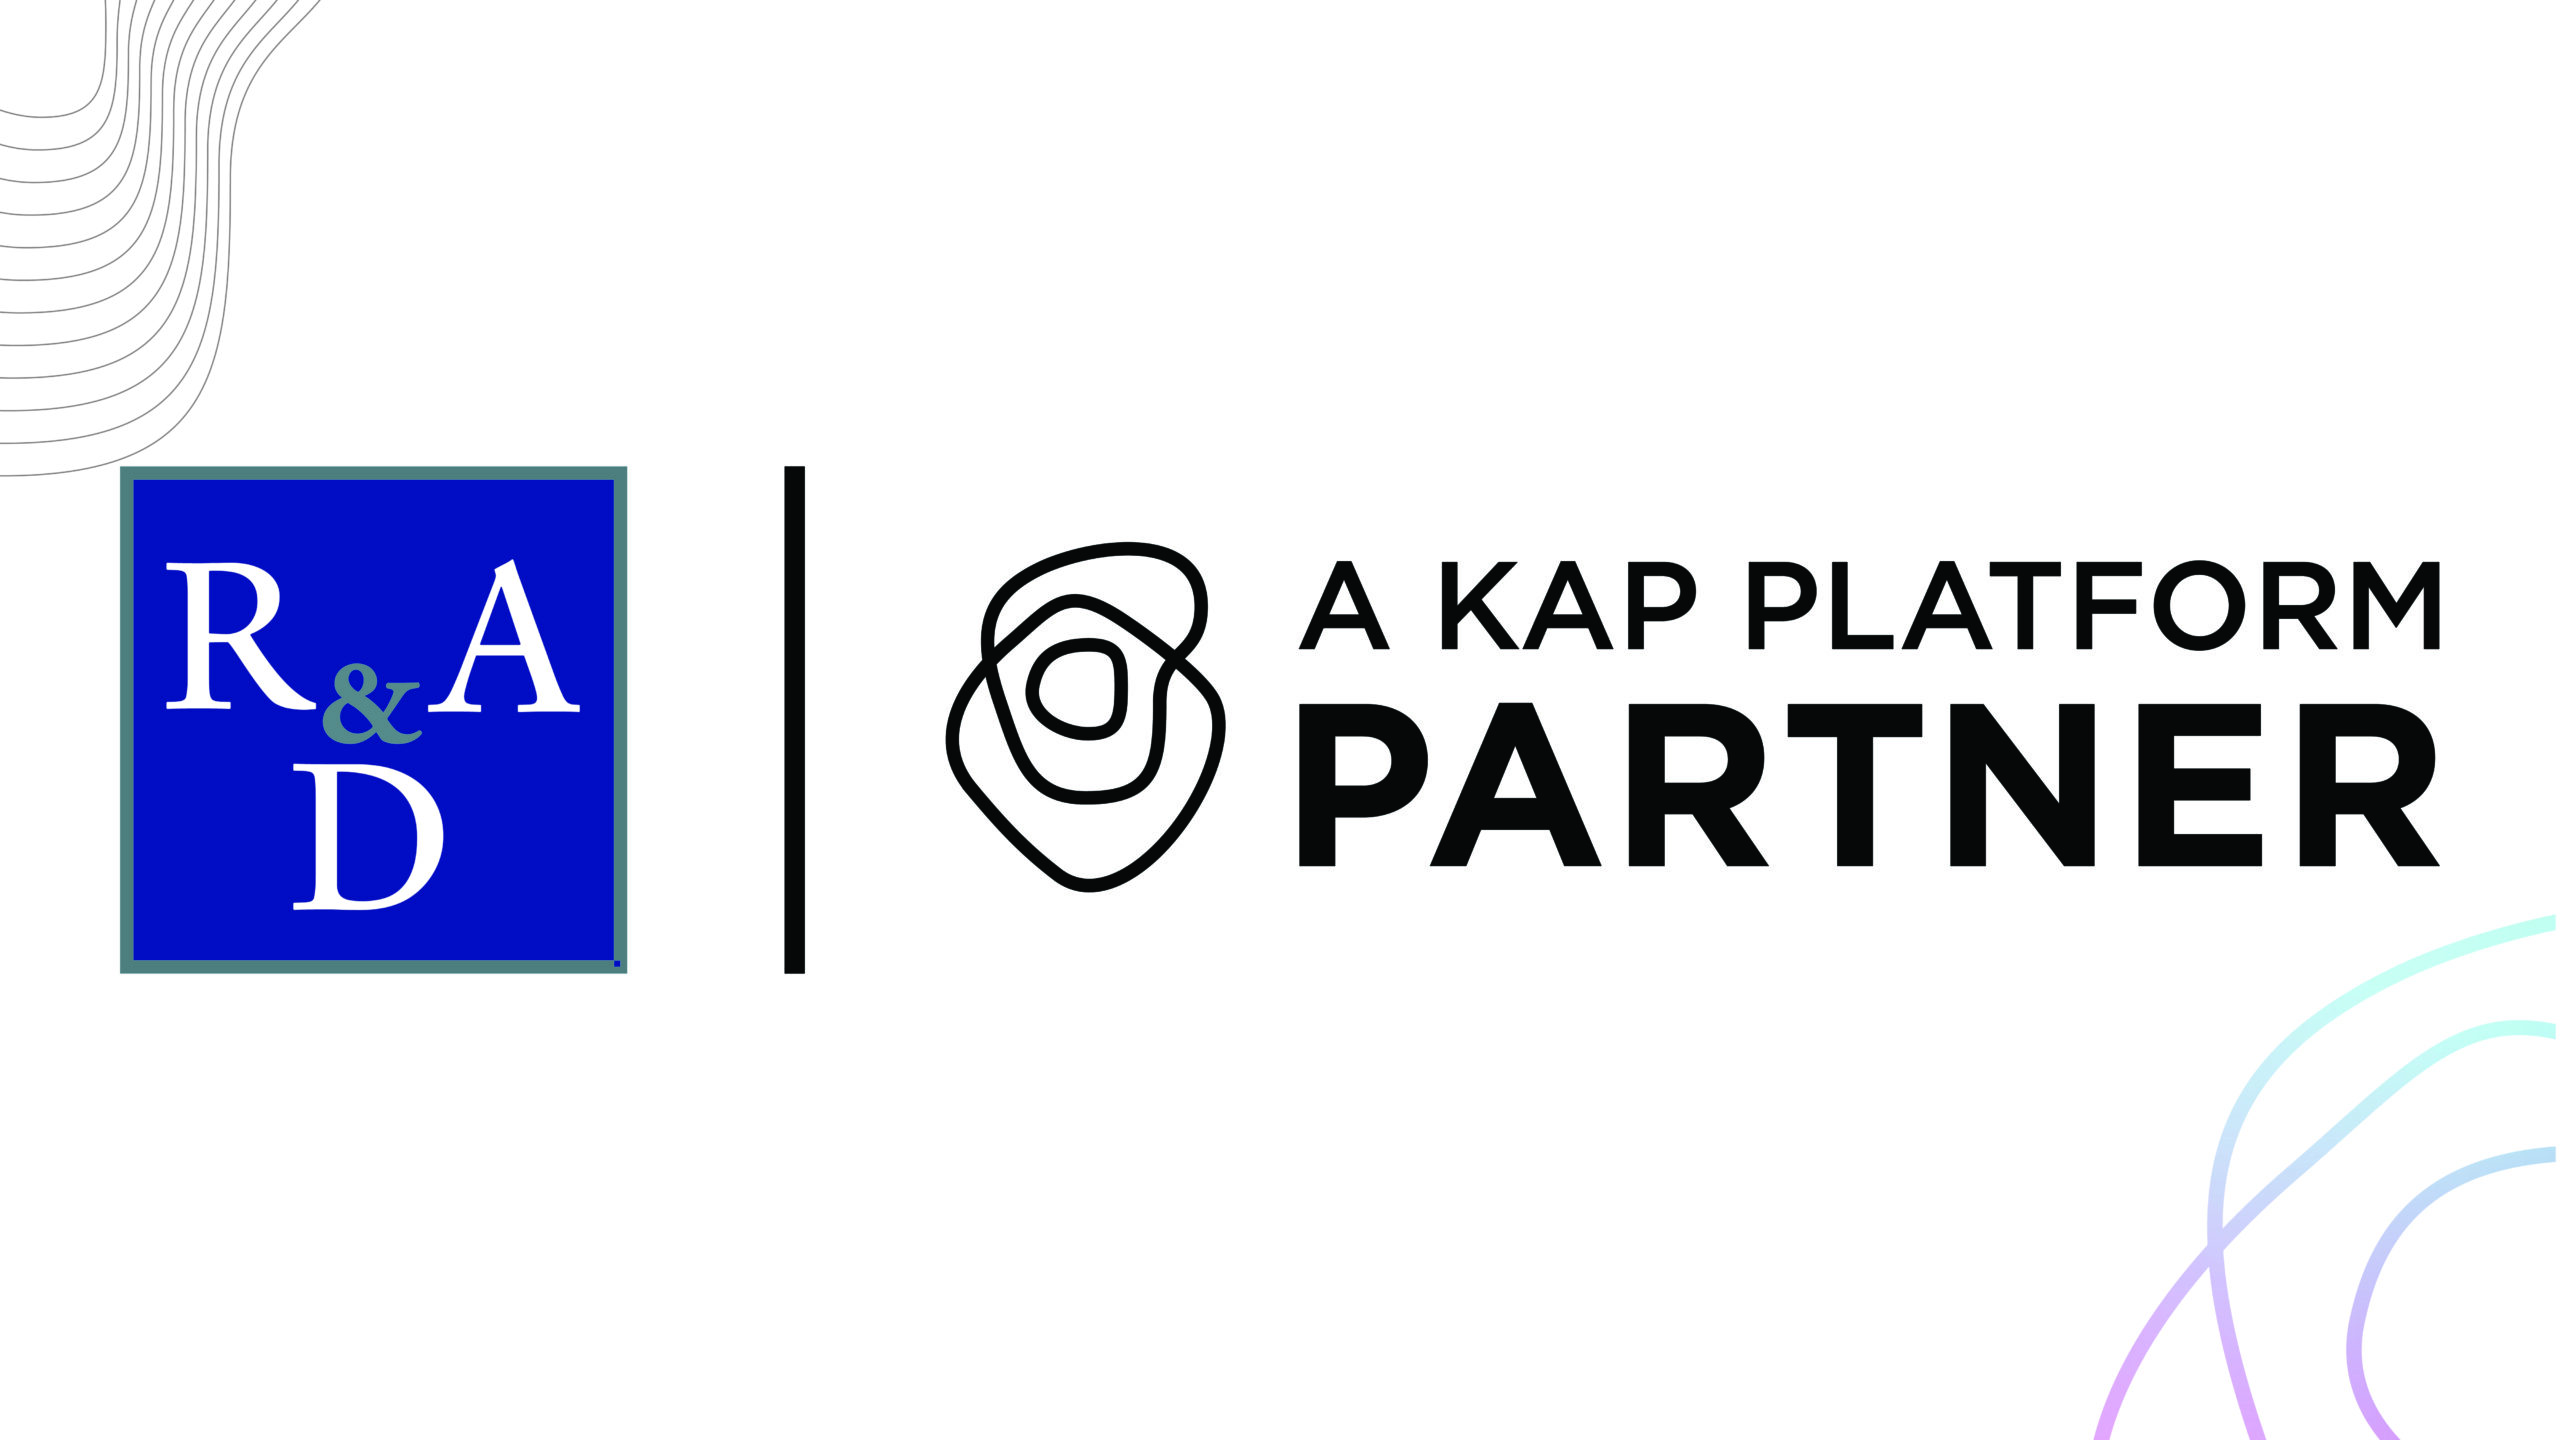 Roland Abbott & DeZoort Insurance Partners with KAP